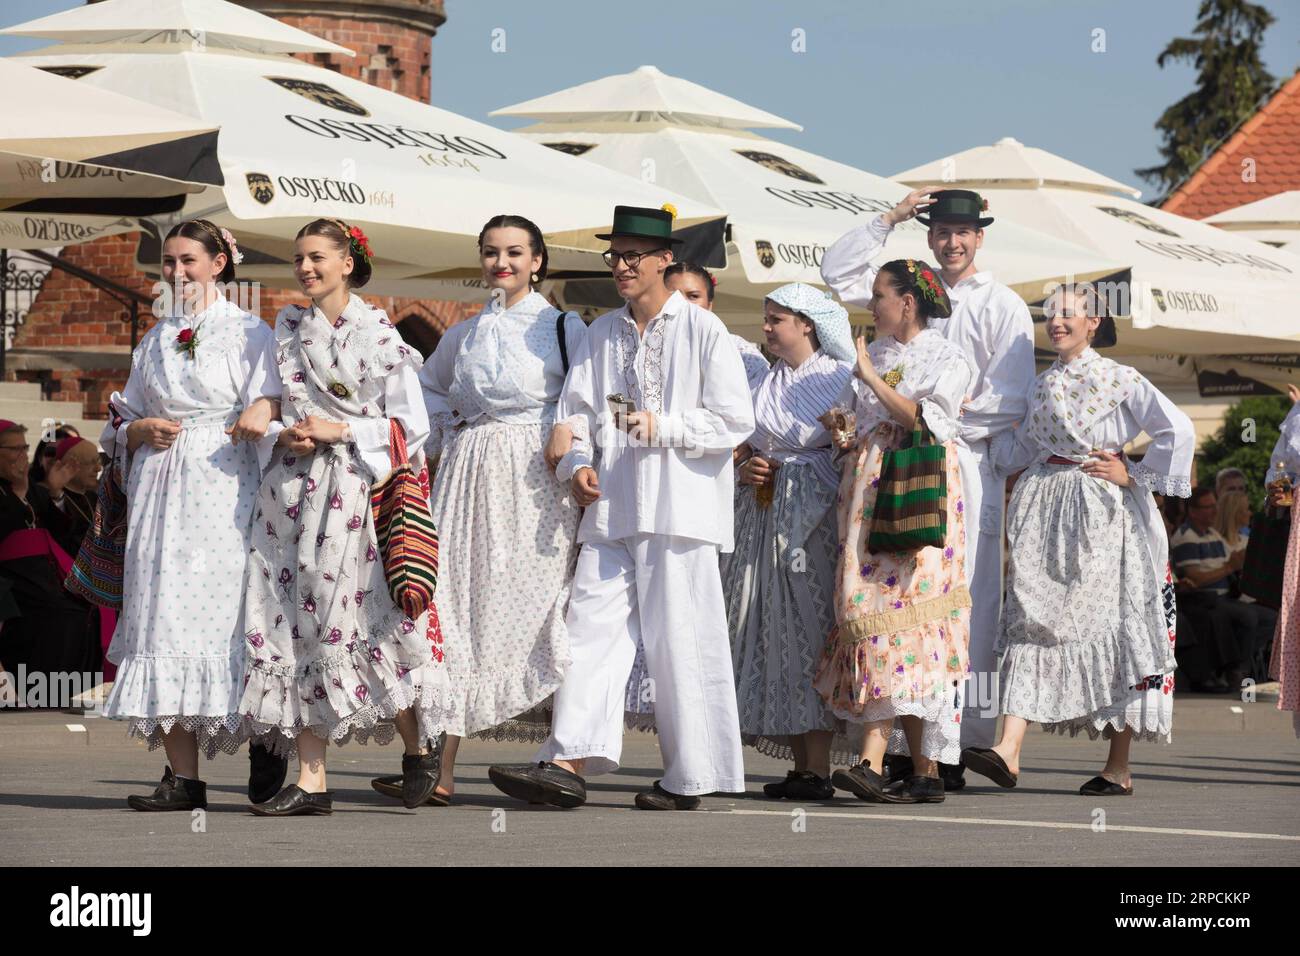 (190707) -- DAKOVO (CROATIA), July 7, 2019 -- People in traditional costumes take part in the 53rd Dakovacki vezovi festival in Dakovo, Croatia, on July 7, 2019. Dakovacki vezovi festival, one of the major cultural events in Croatia, presents traditional costumes and performances. ) CROATIA-DAKOVO-FOLKLORE-FESTIVAL DubravkaxPetric PUBLICATIONxNOTxINxCHN Stock Photo